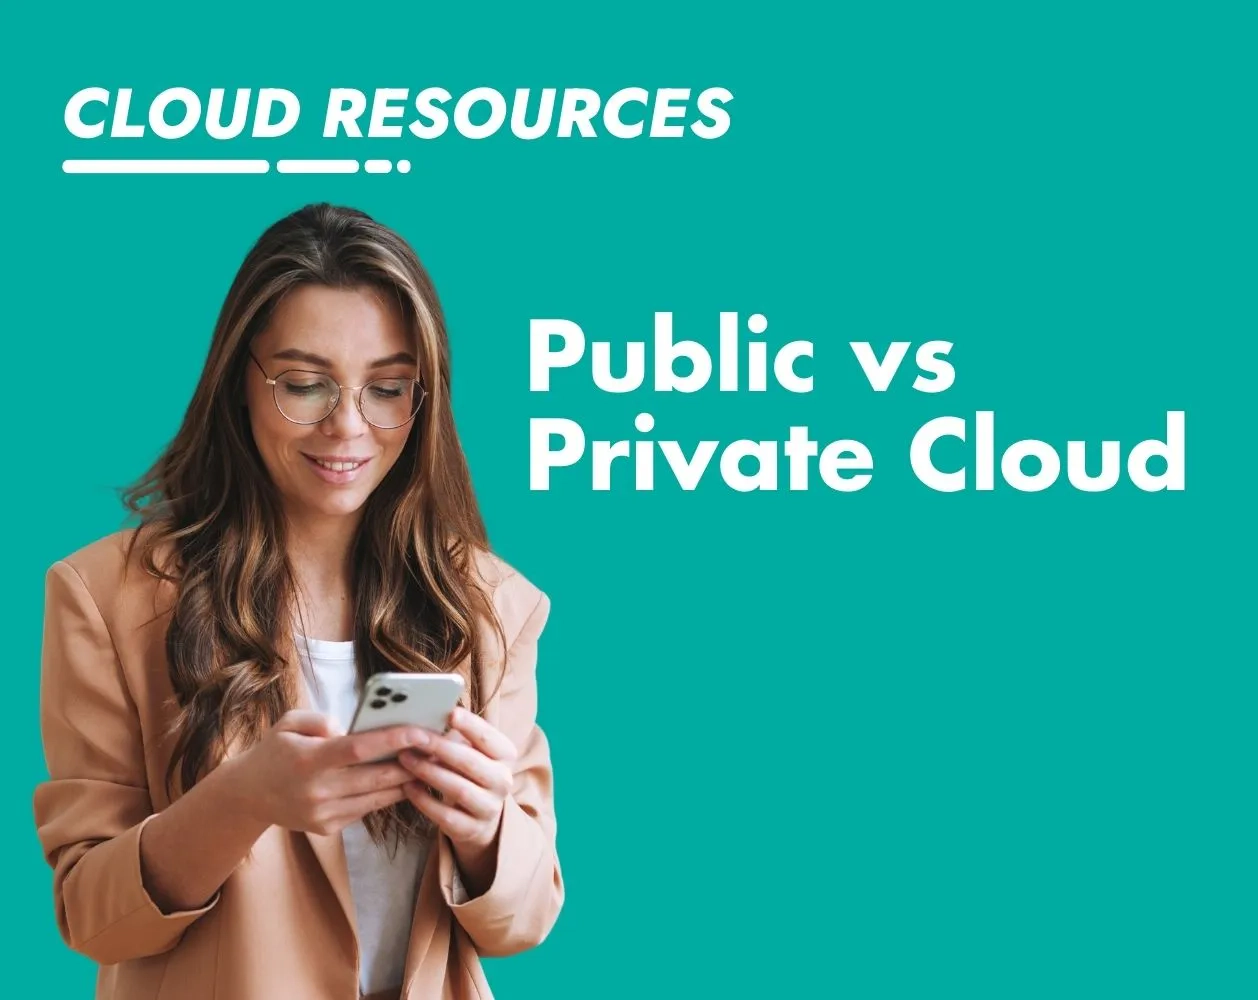 Public vs private cloud